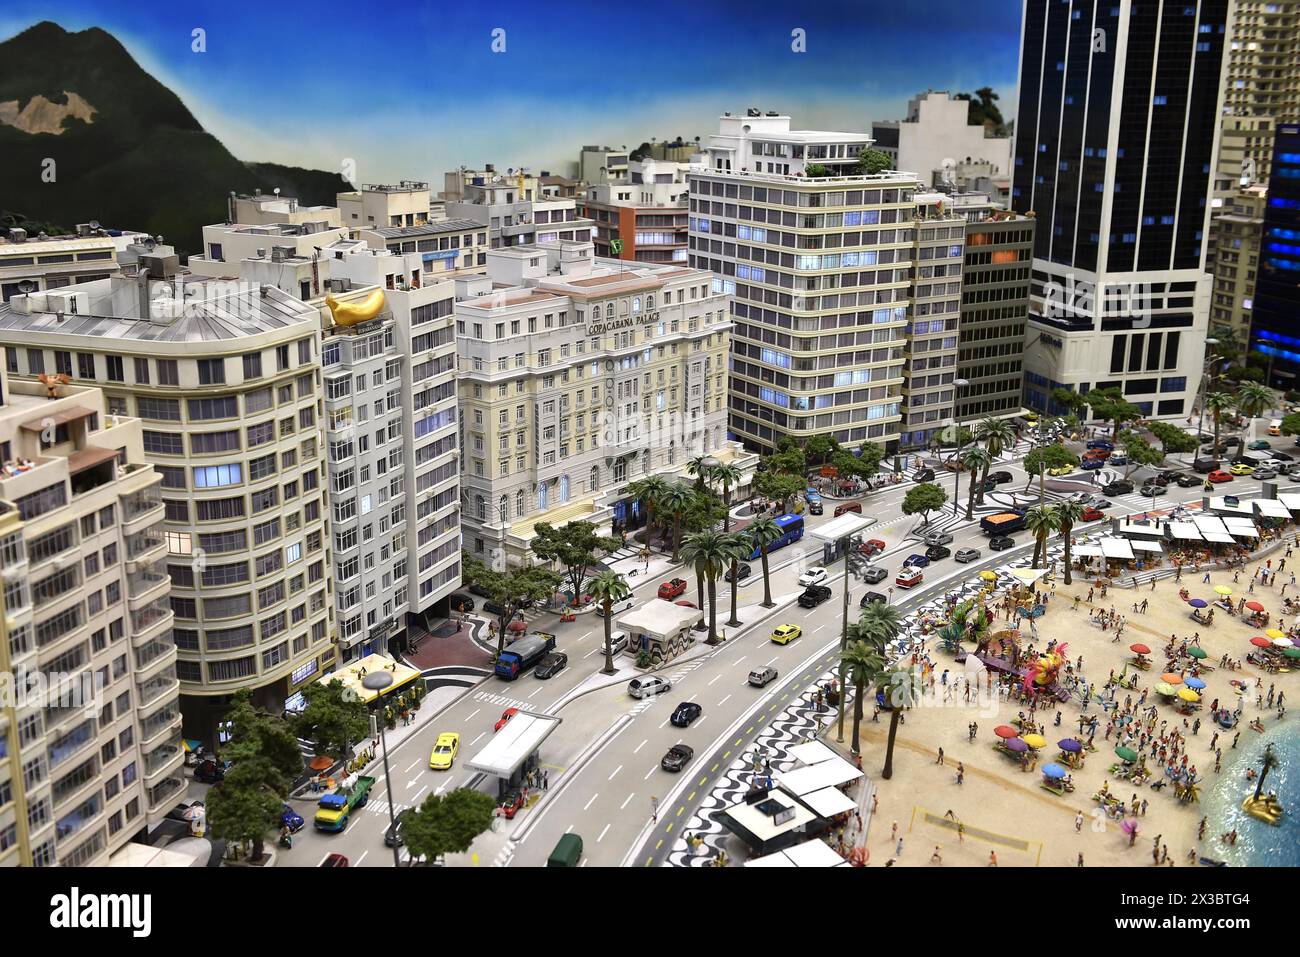 Rio de Janeiro with Copacabana in Miniatur Wunderland Hamburg, Germany Stock Photo